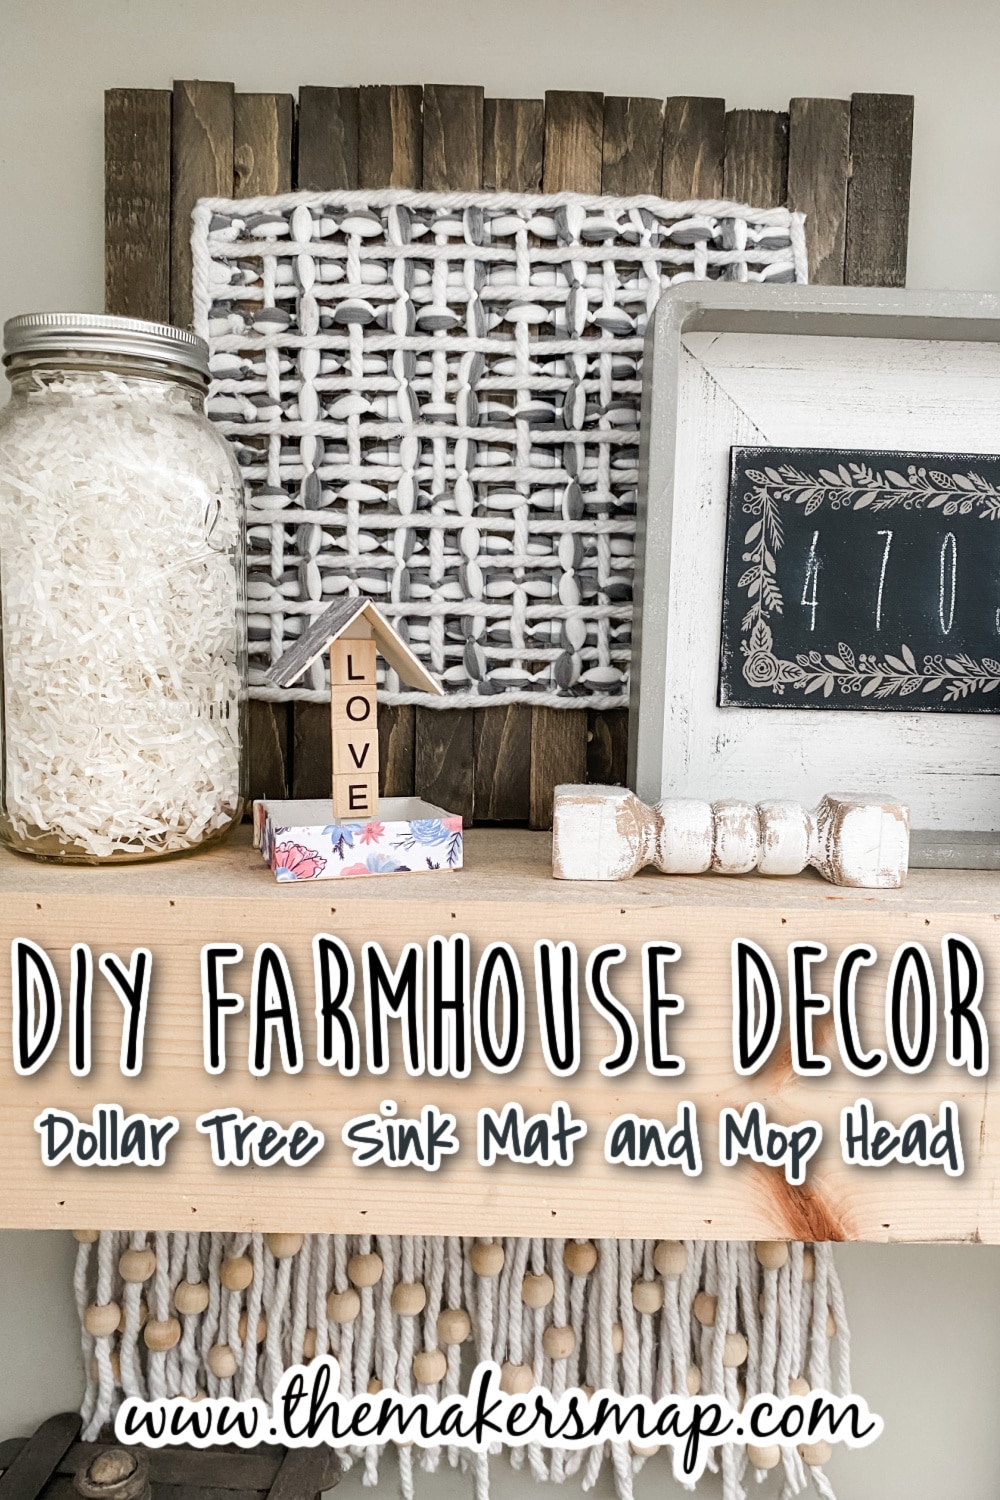 DIY Farmhouse Decor from a Dollar Tree Sink Mat